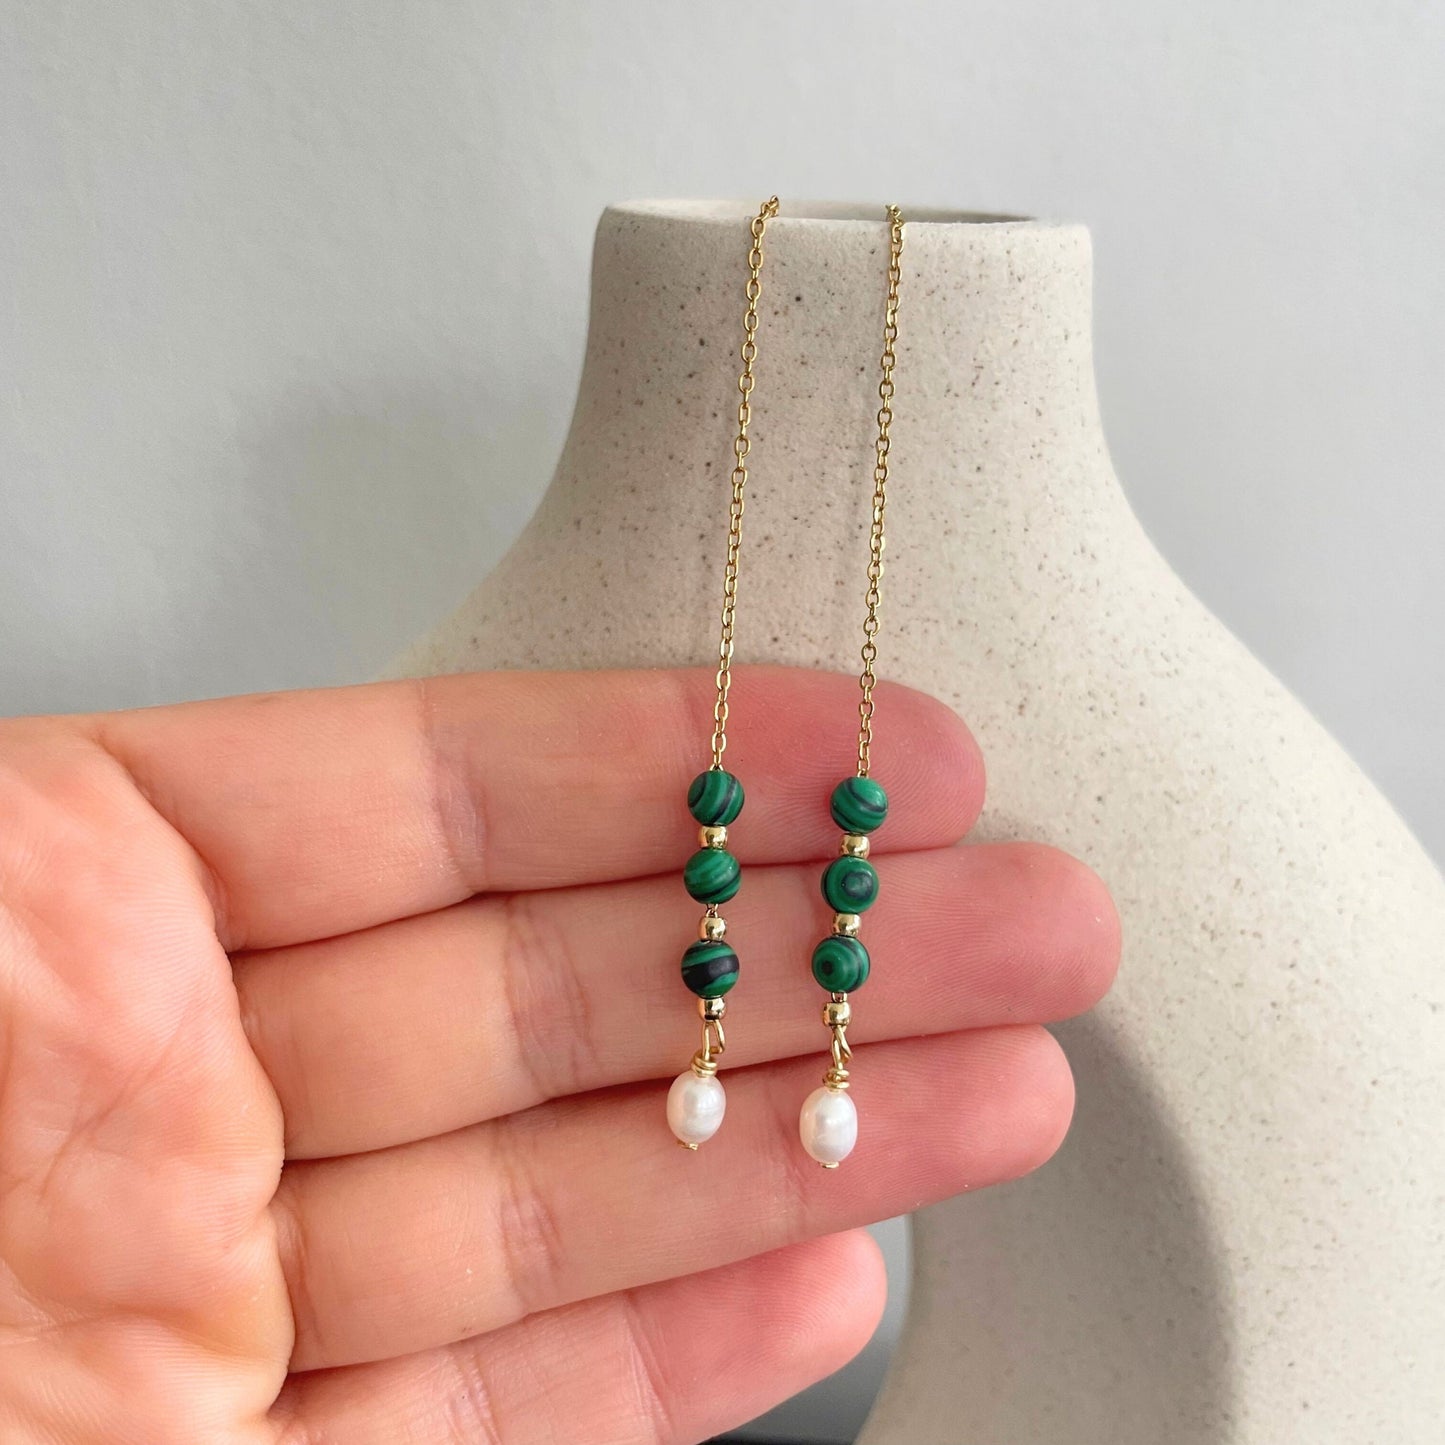 Minimalist Green Genuine Malachite Stone Chain Drop Fine Earrings - Threaded Bohemian Beads Natural Pearl Long Dangling Charm Gold Earrings